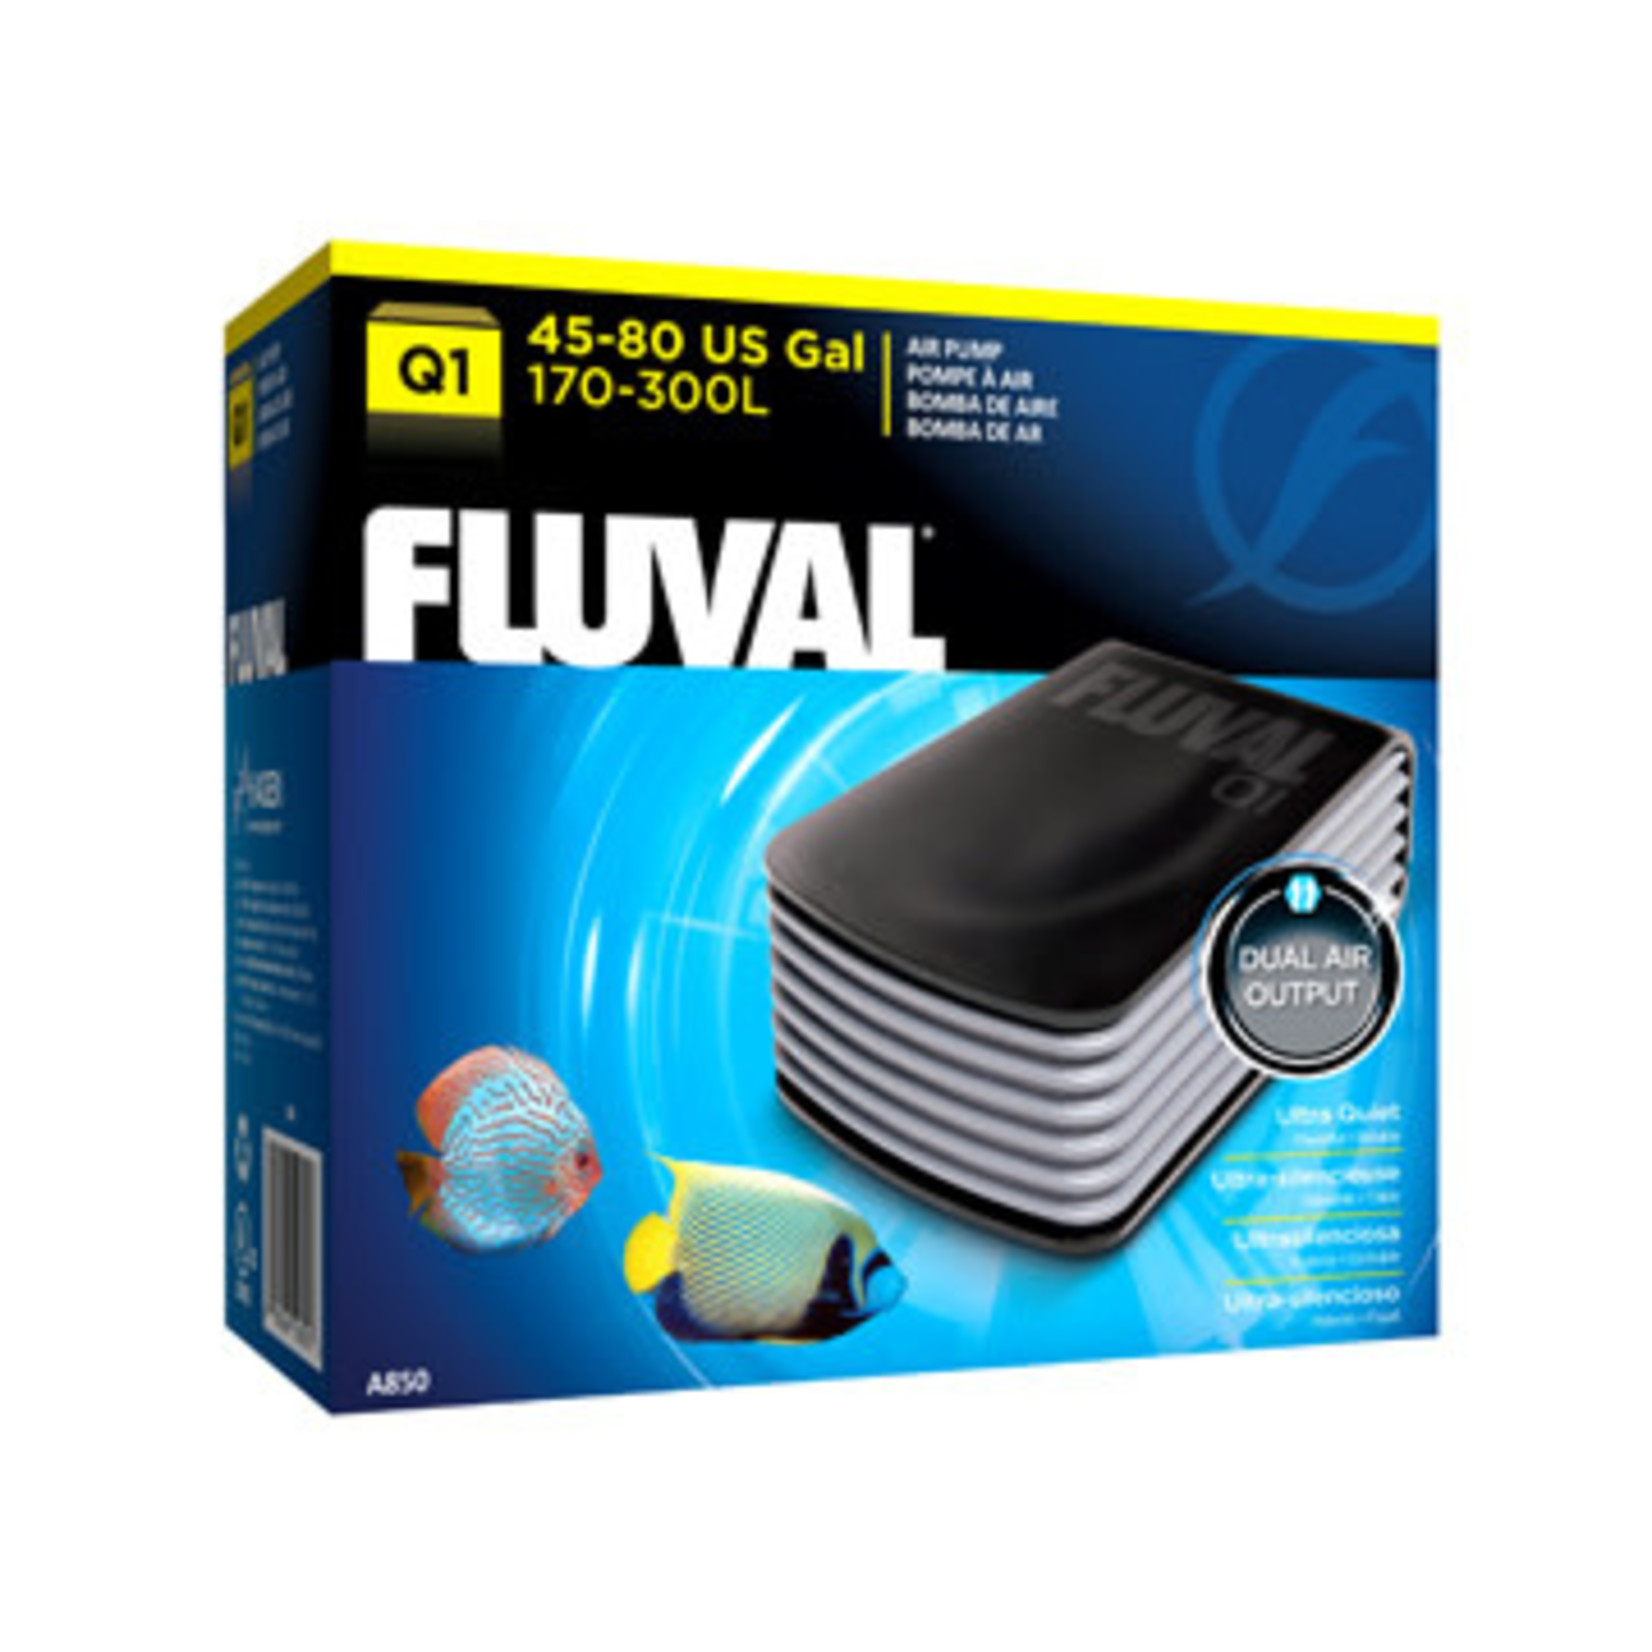 Fluval Fluval Q1 Air Pump (replaces A805)